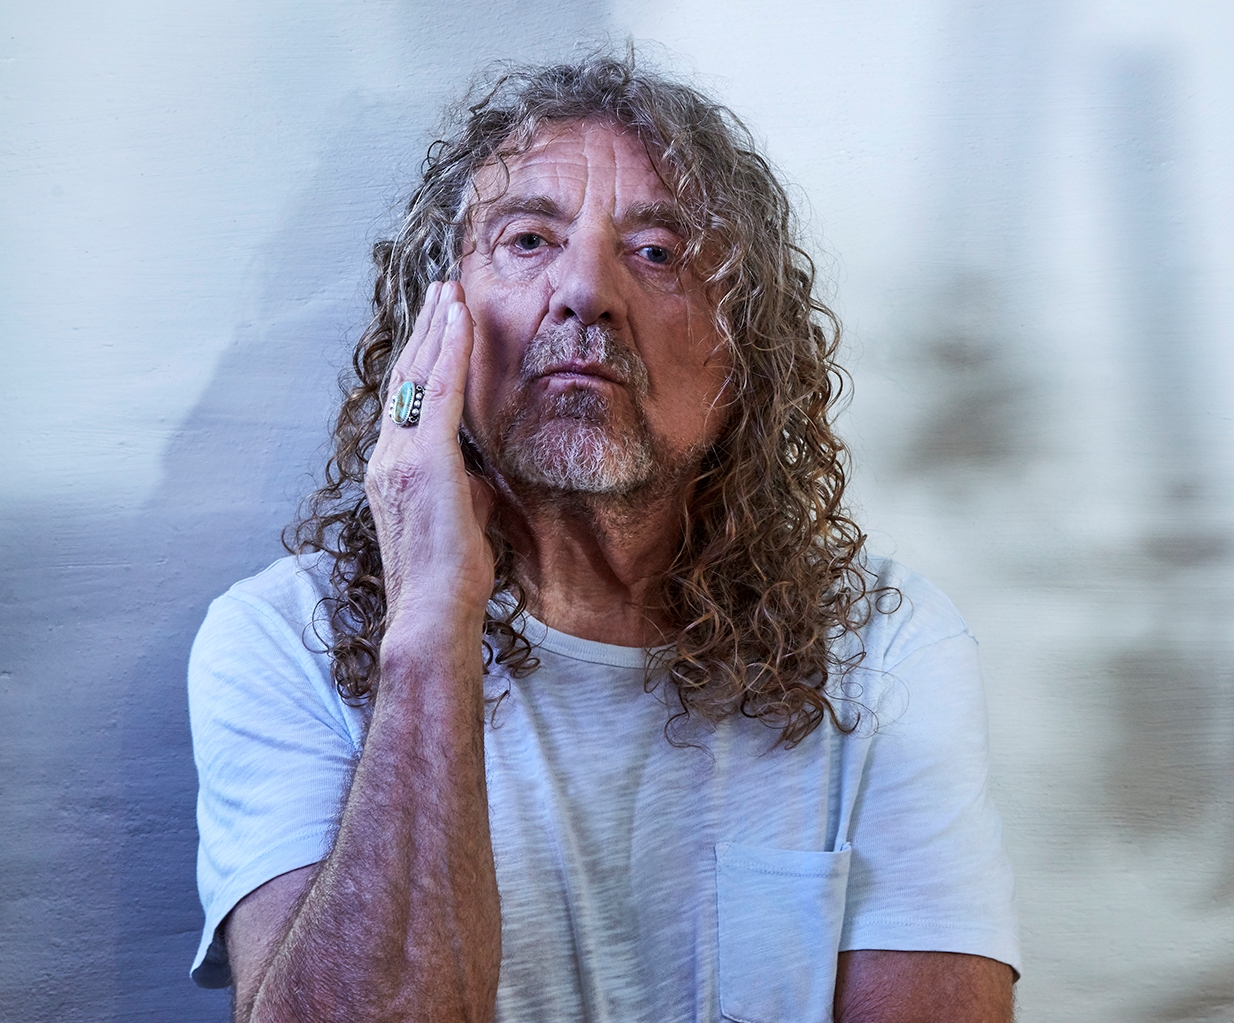 Robert Plant this November 17 at Colston Hall in Bristol